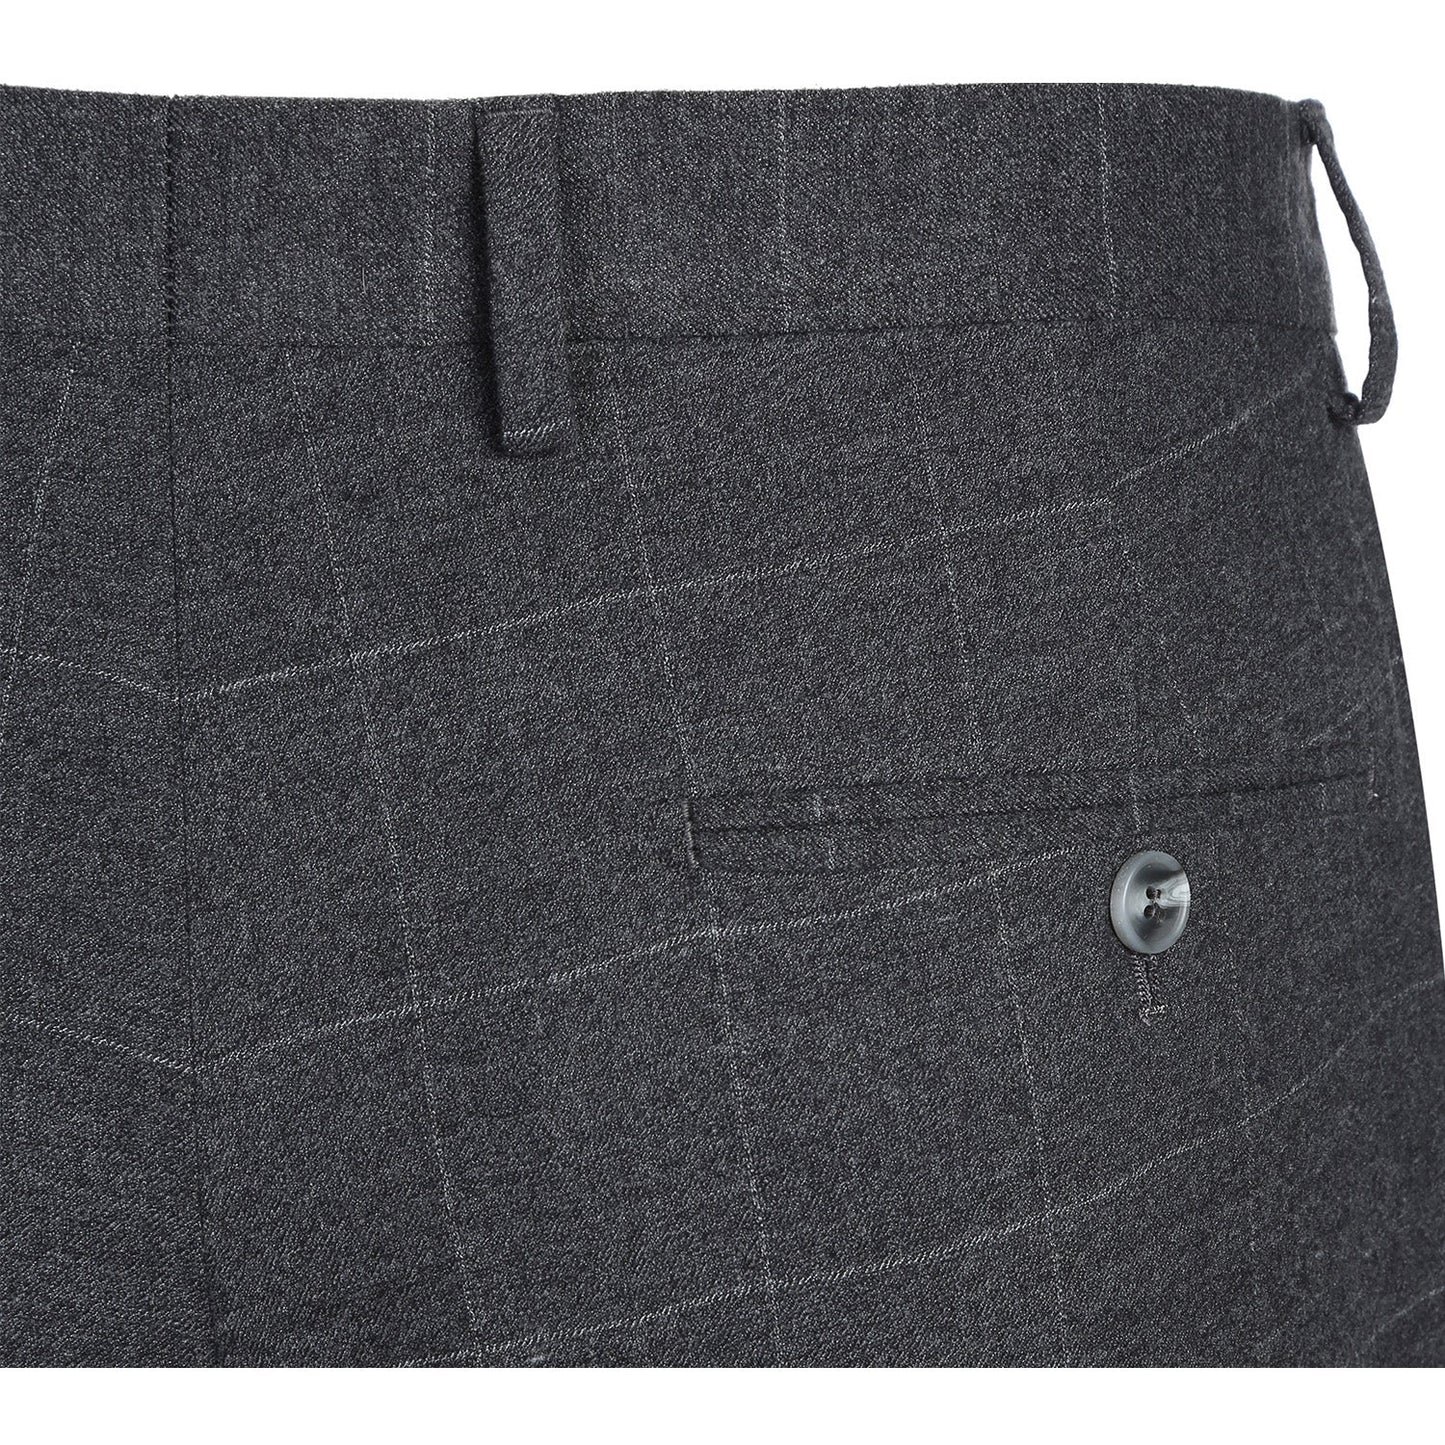 293-31 Men's Slim Fit Grey Windowpane Suit